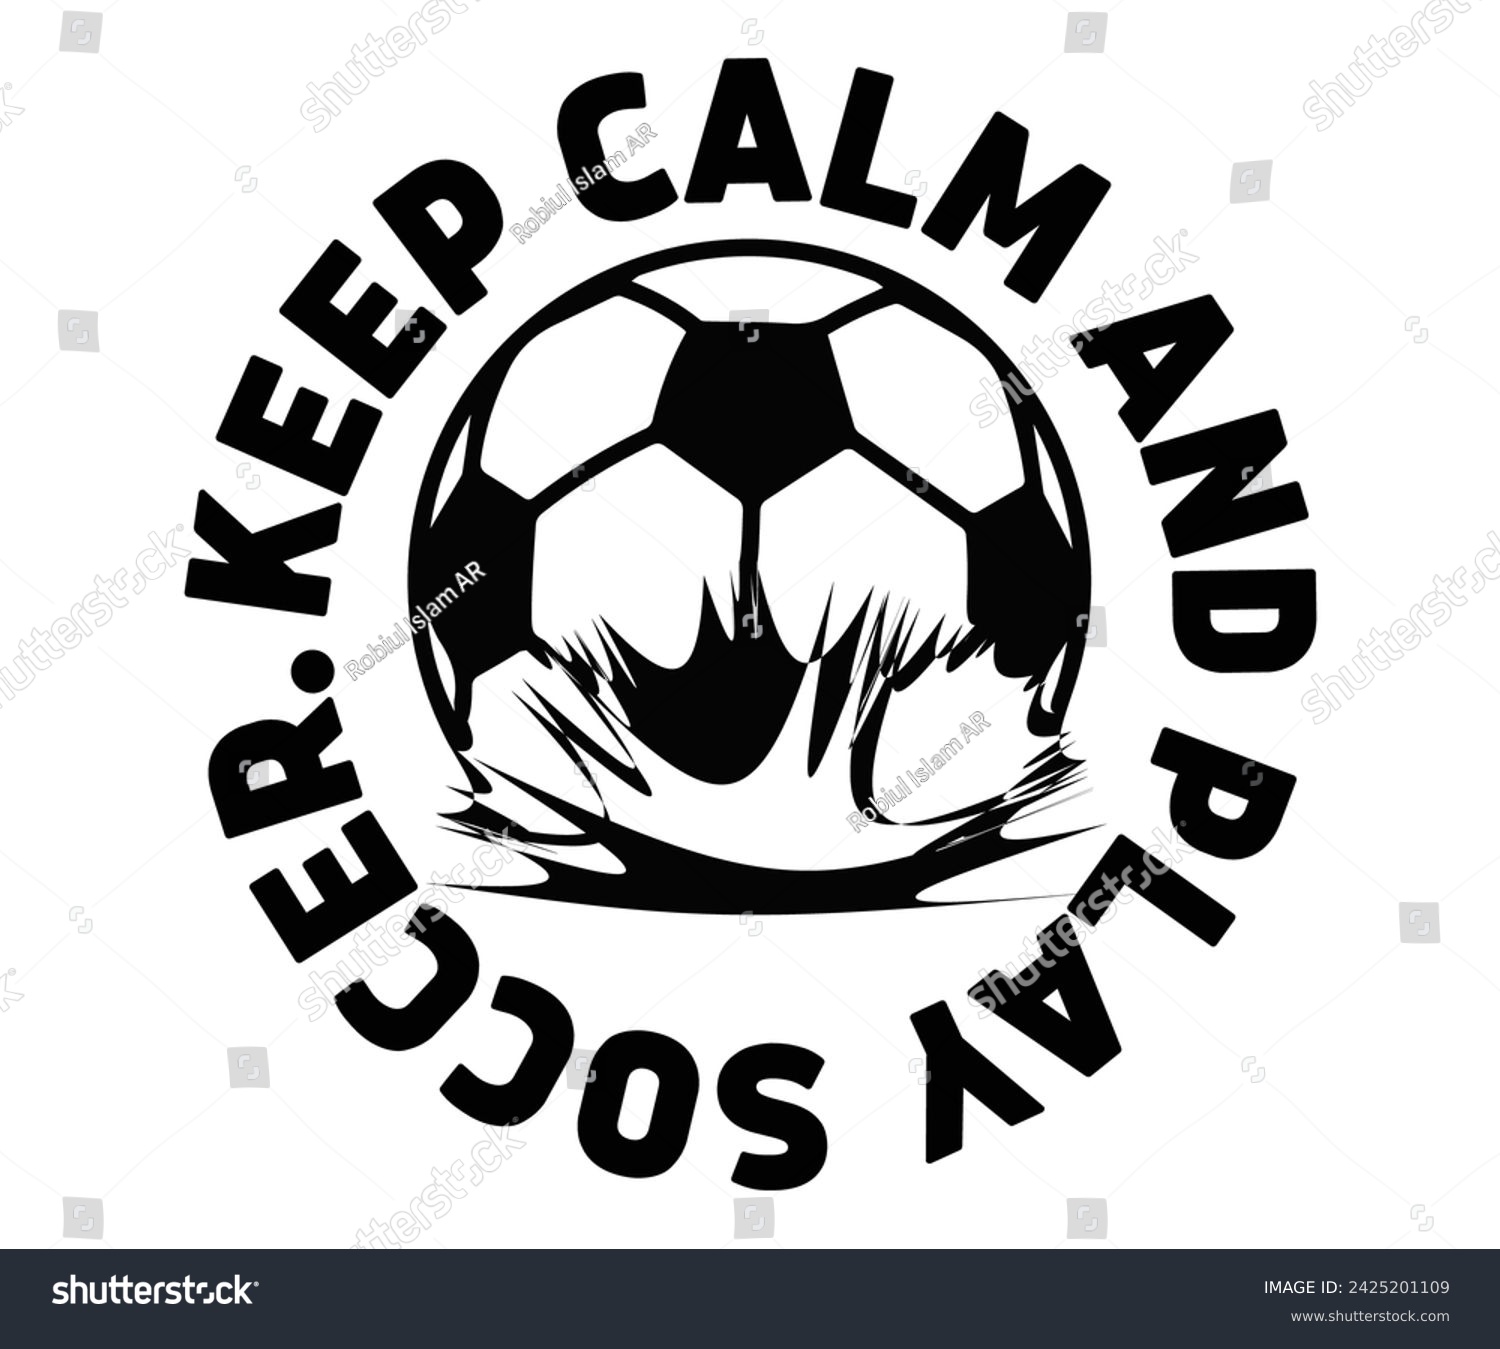 SVG of Keep Calm And Play Svg,Soccer Day, Soccer Player Shirt, Gift For Soccer, Soccer Football, Sport Design Svg,Cut File, Soccer t-Shirt Design, European Football,  svg